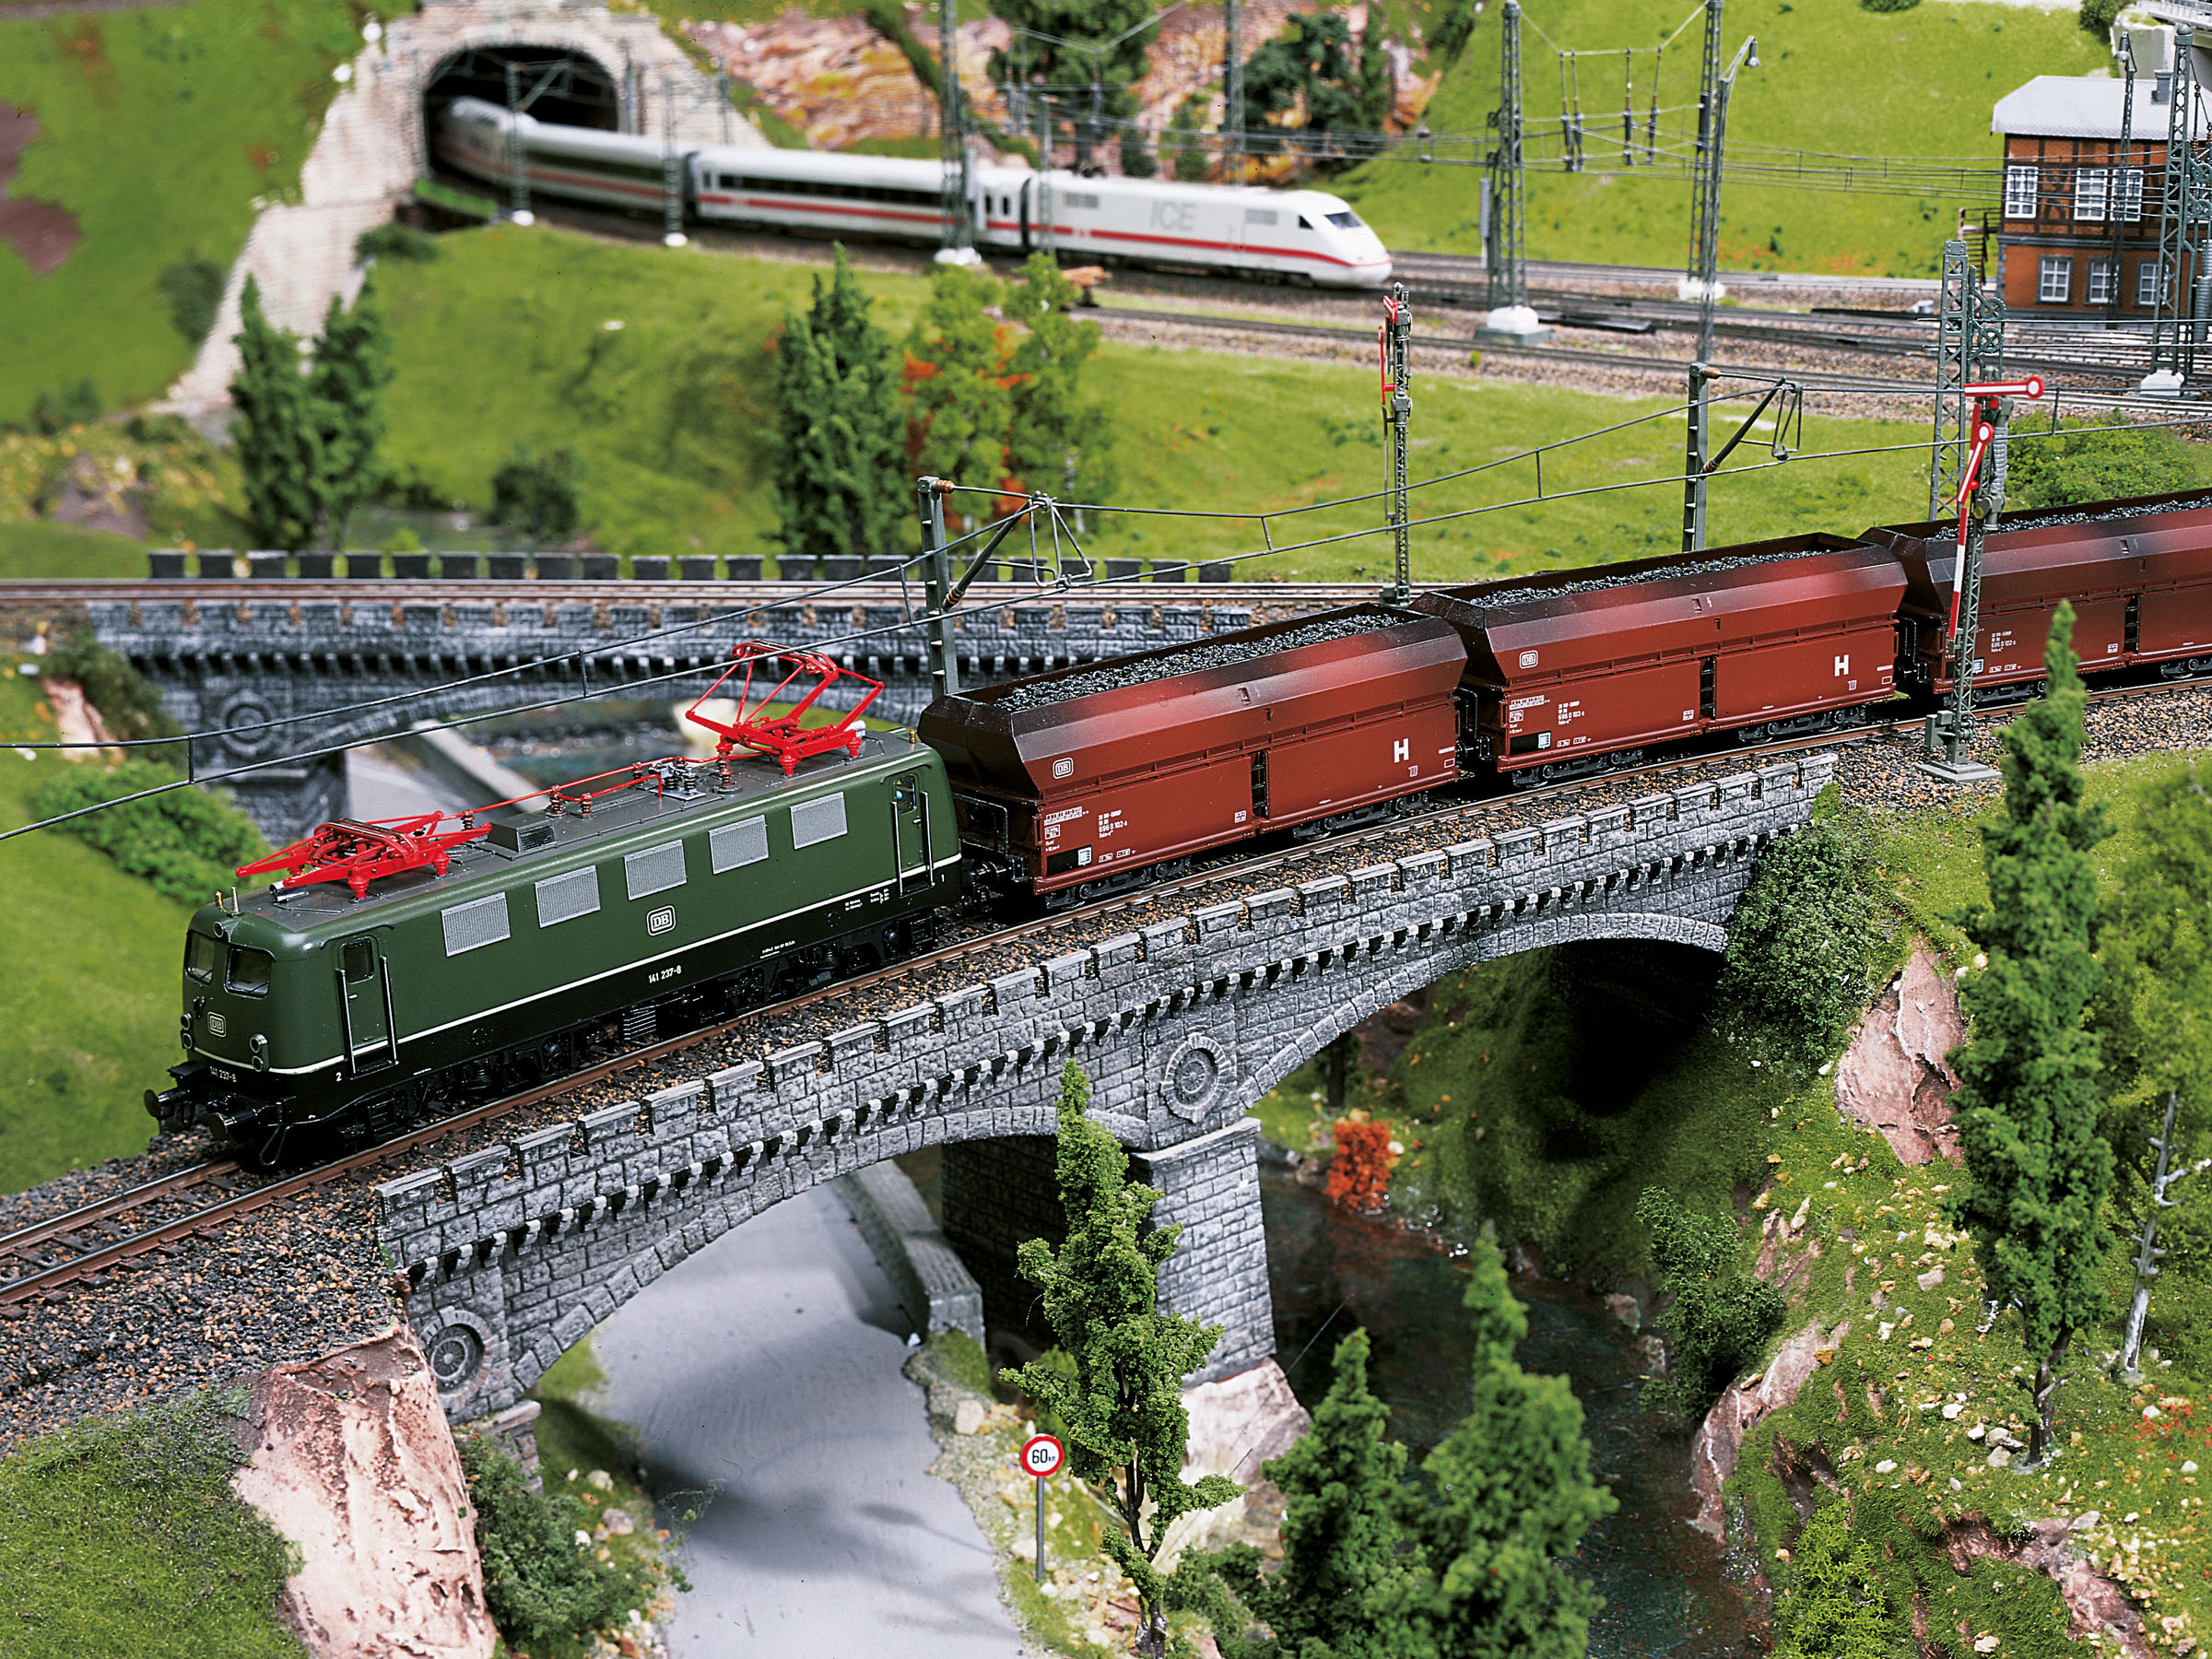 trains, rail transport modelling, modélisme ferroviaire - Fascinating video of the world’s largest HO scale model railway layout - Miniatur Wunderland Germany